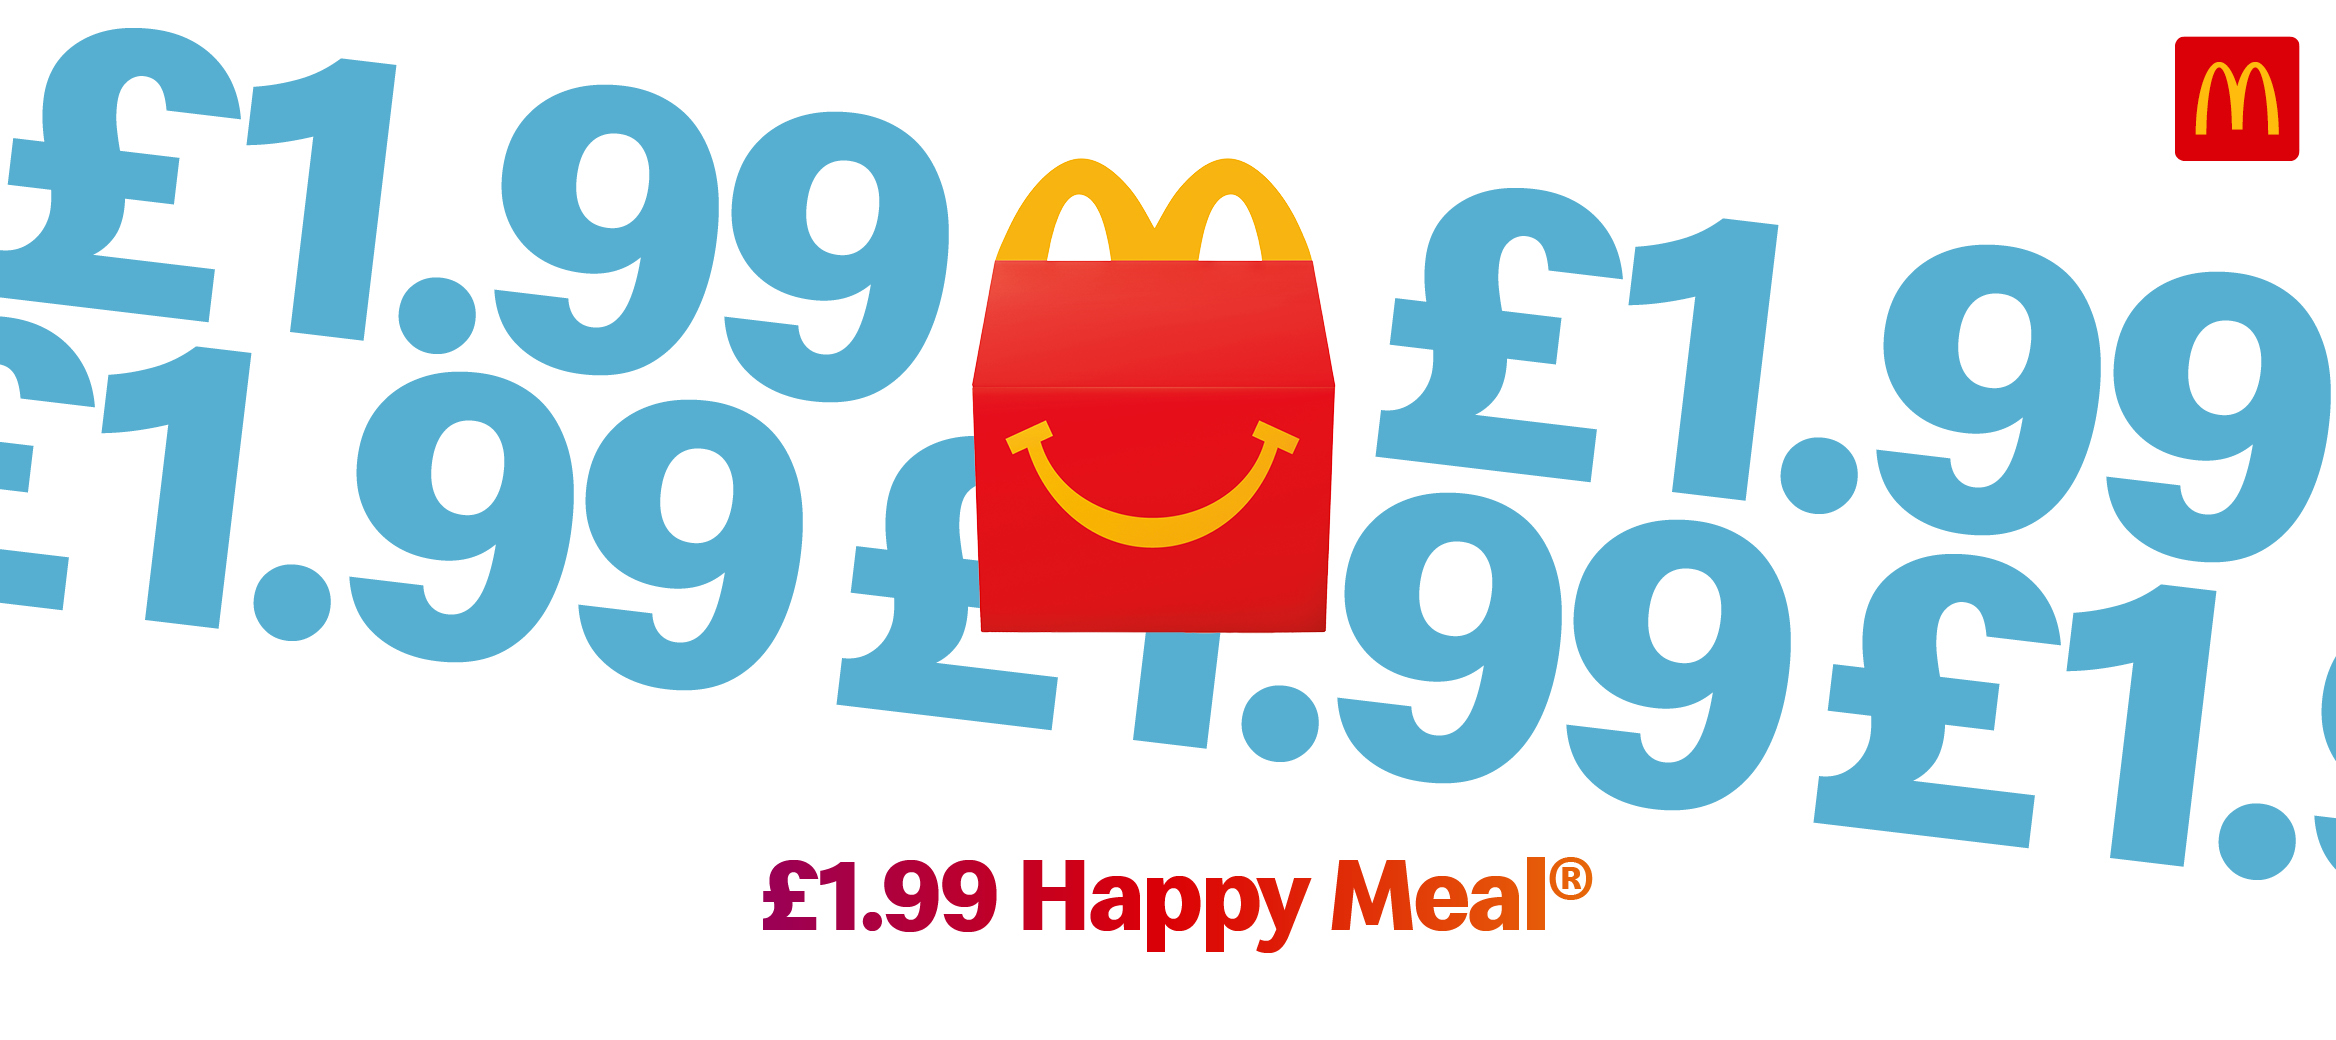 McDonalds - Happy Meal